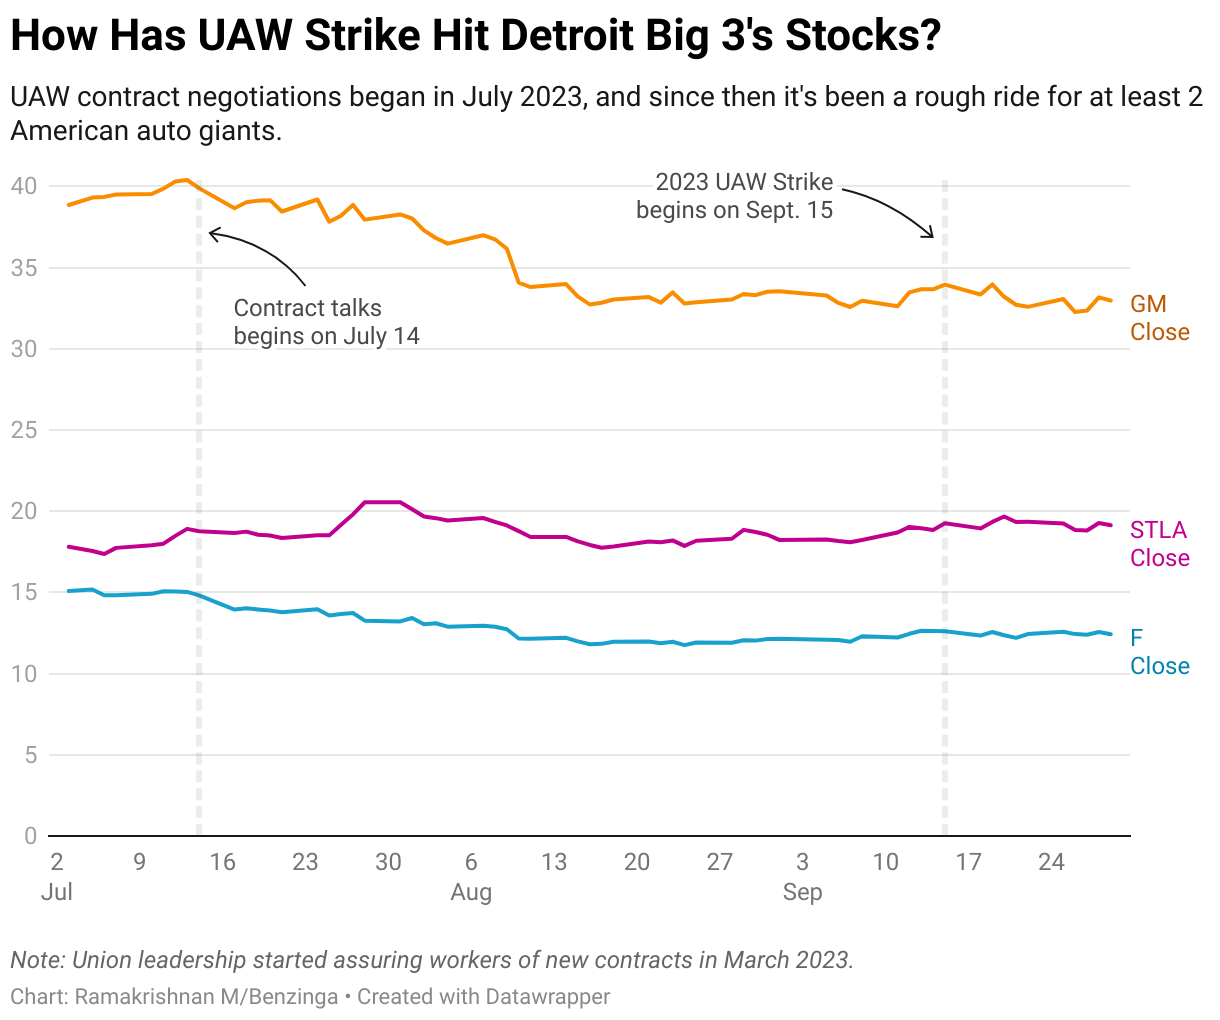 How Has UAW Strike Hit Detroit Big 3's Stocks?